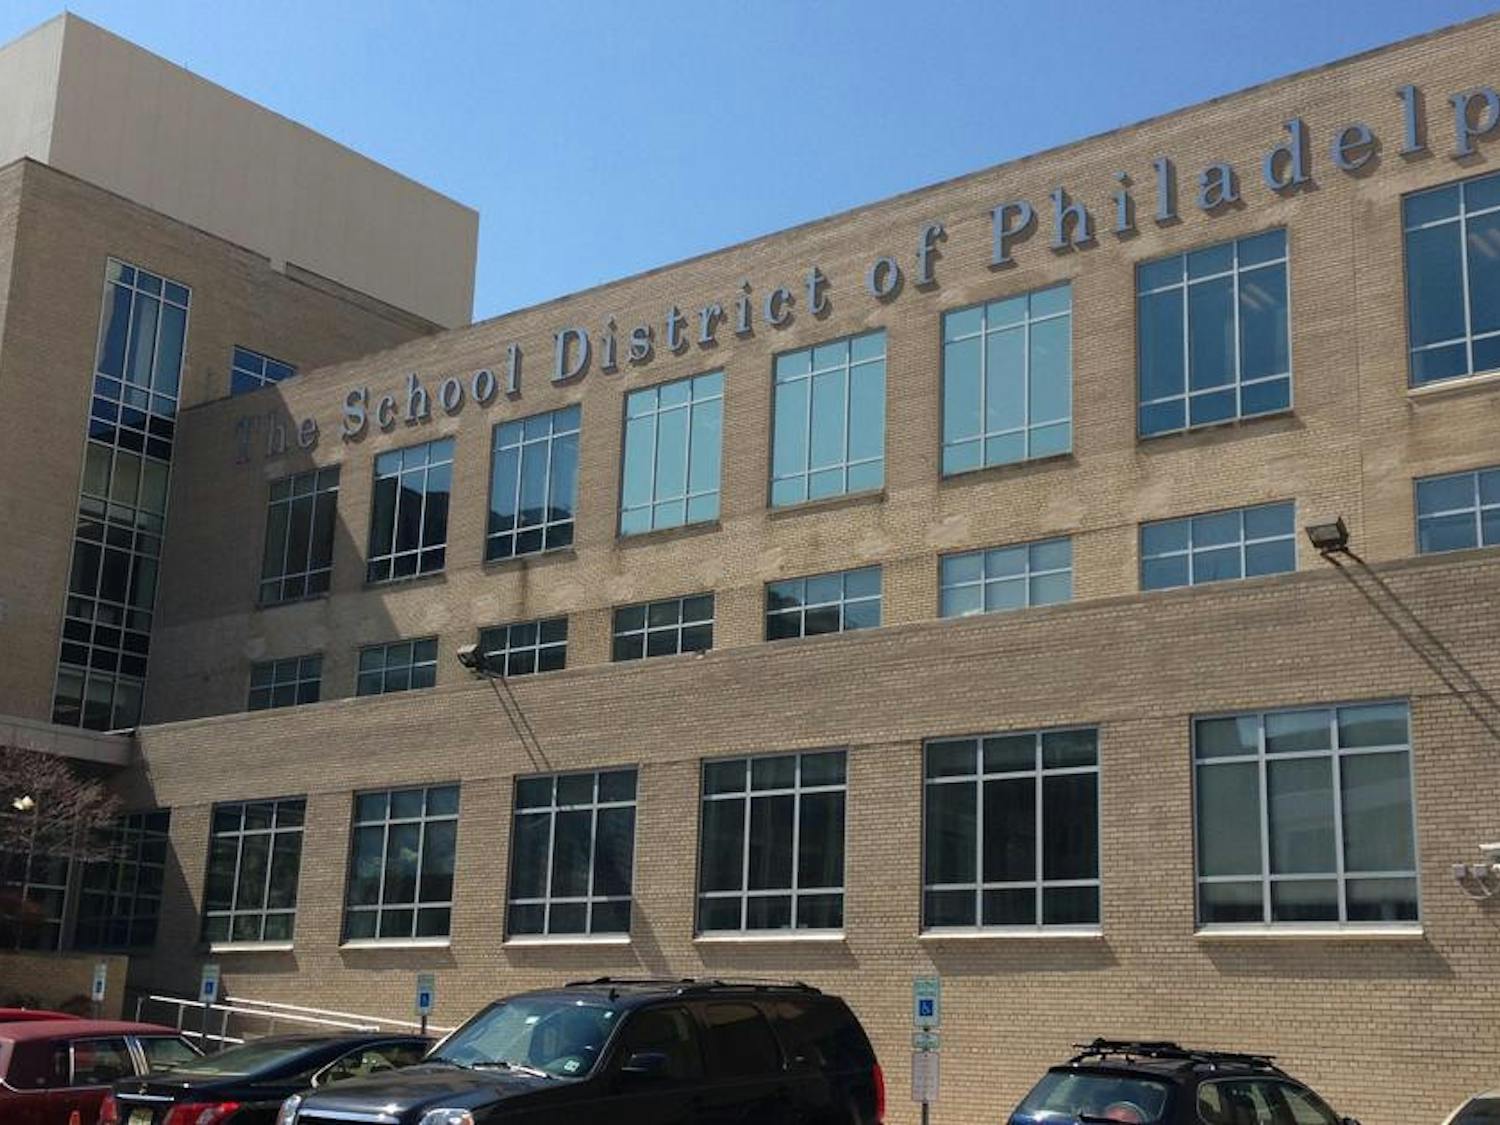 The School District of Philadelphia | Source: CBS News